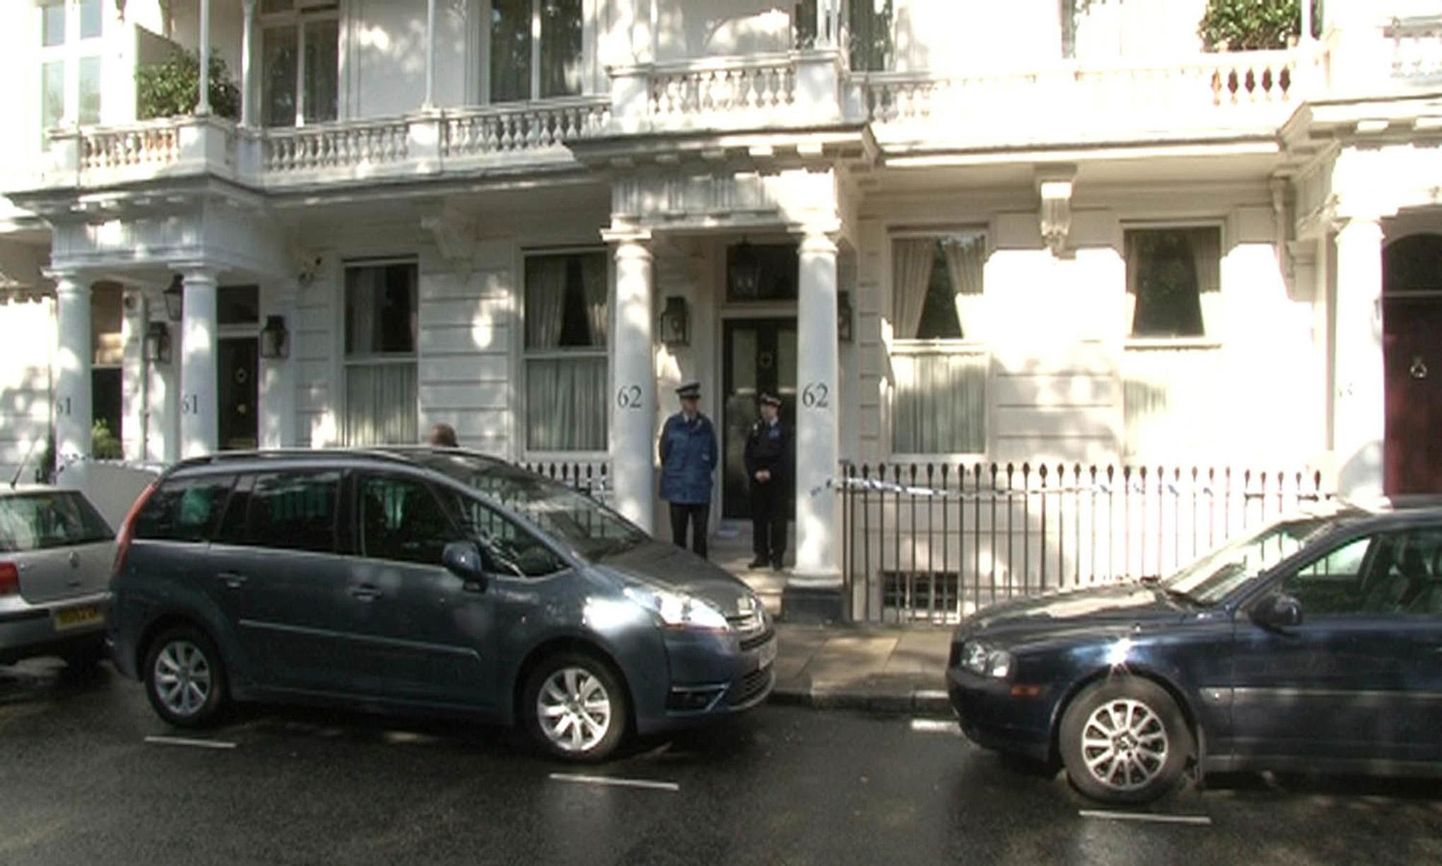 Londonis Chelseas Cadogan Place´is asuv maja, millest leiti Eva Rausing surnuna